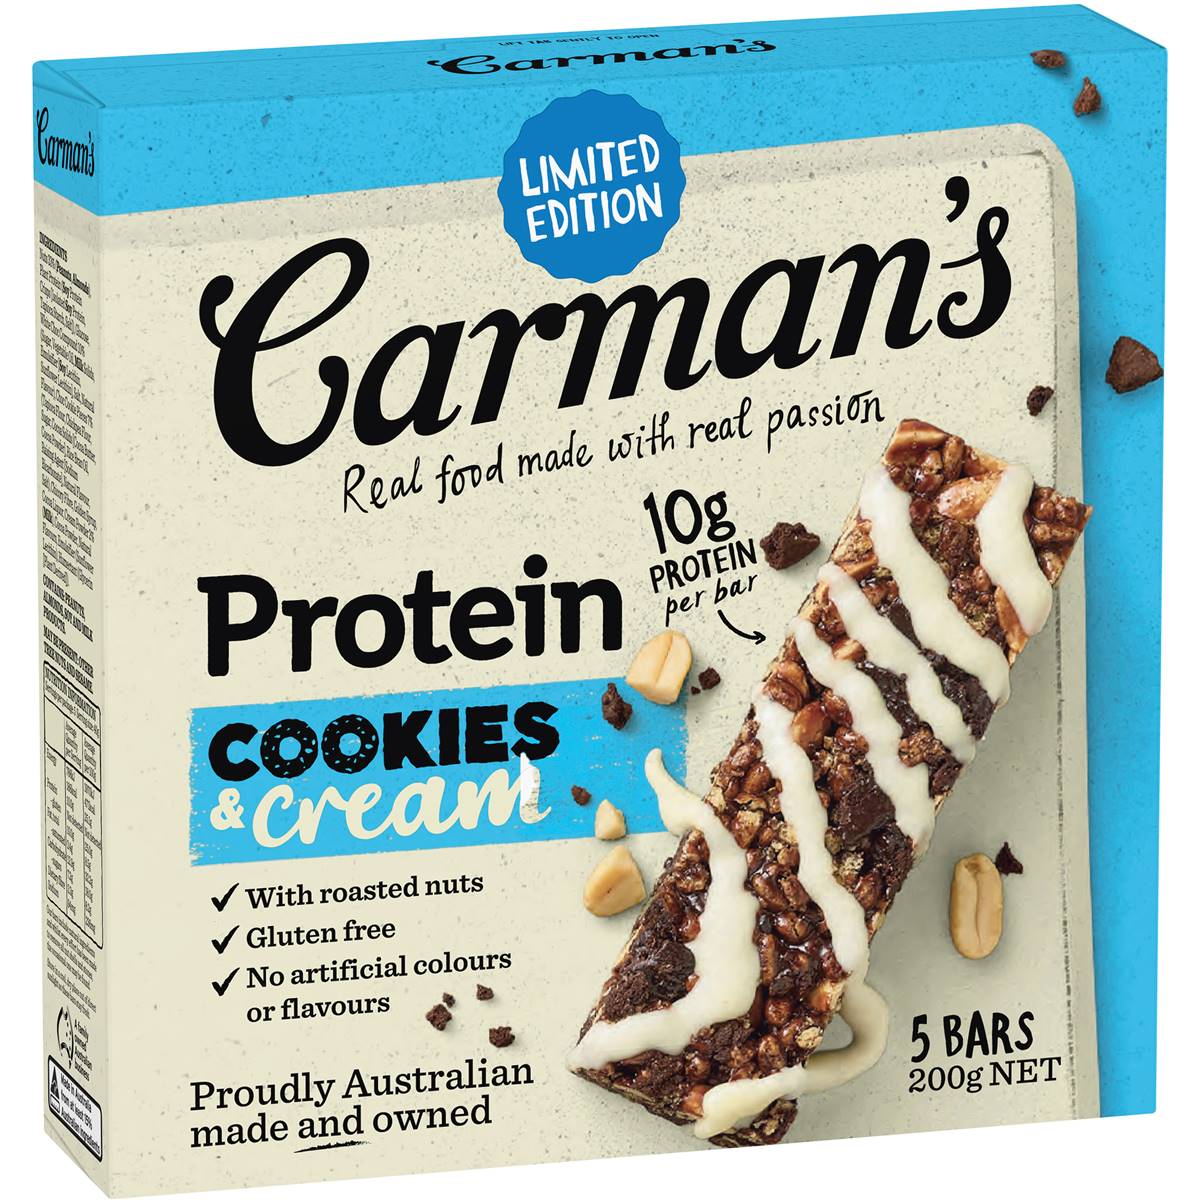 Carman's Limited Edition Cookies & Cream Bars 5x40g